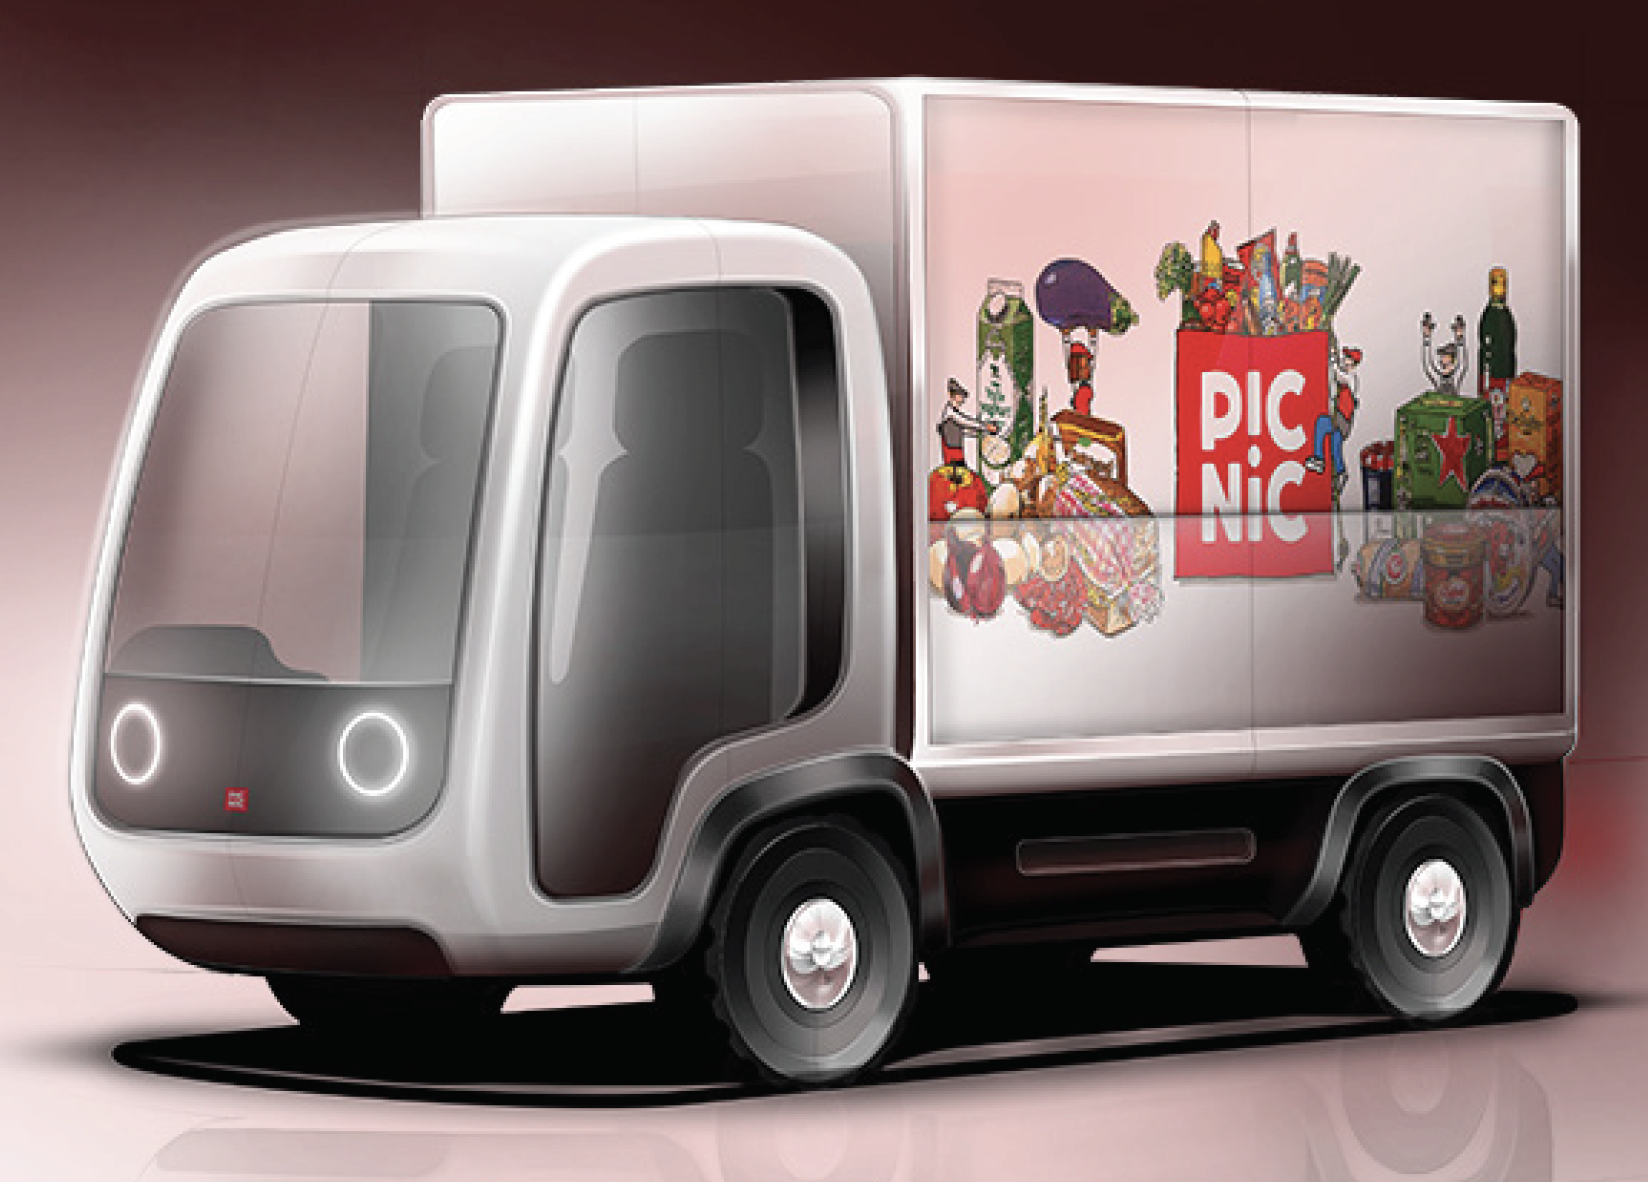 Geschikt redden Buik Designing a new last-mile delivery vehicle for Picnic – CityLogistics